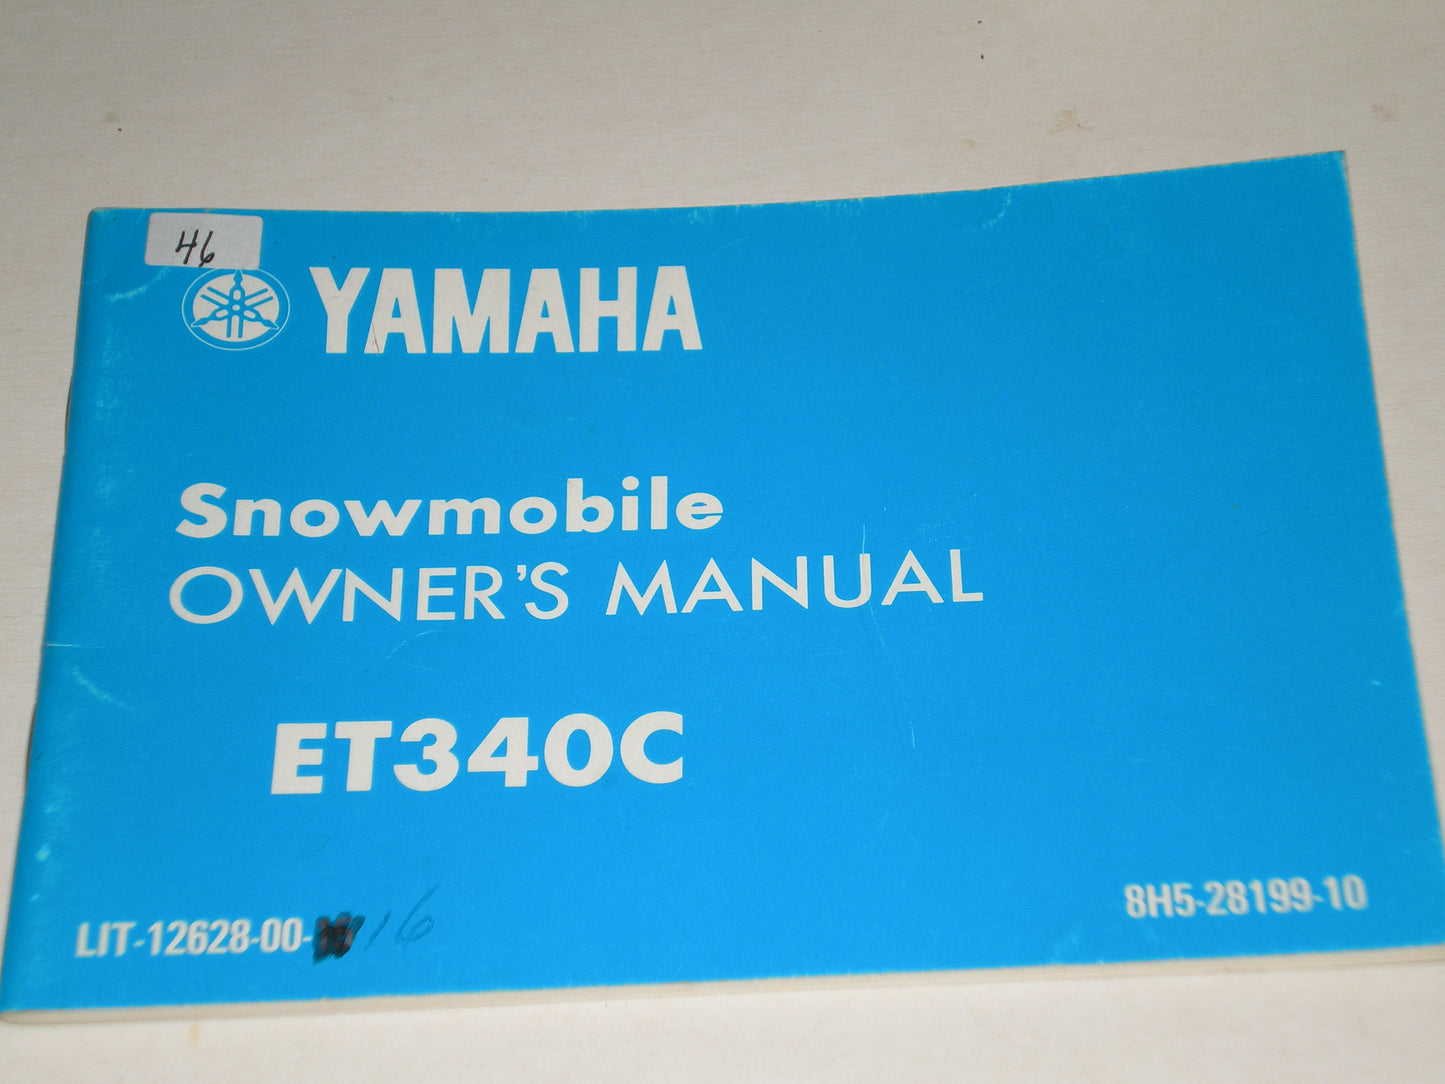 YAMAHA ET340 C Snowmobile Owner's Manual 8H5-28199-10  LIT-12628-00-15